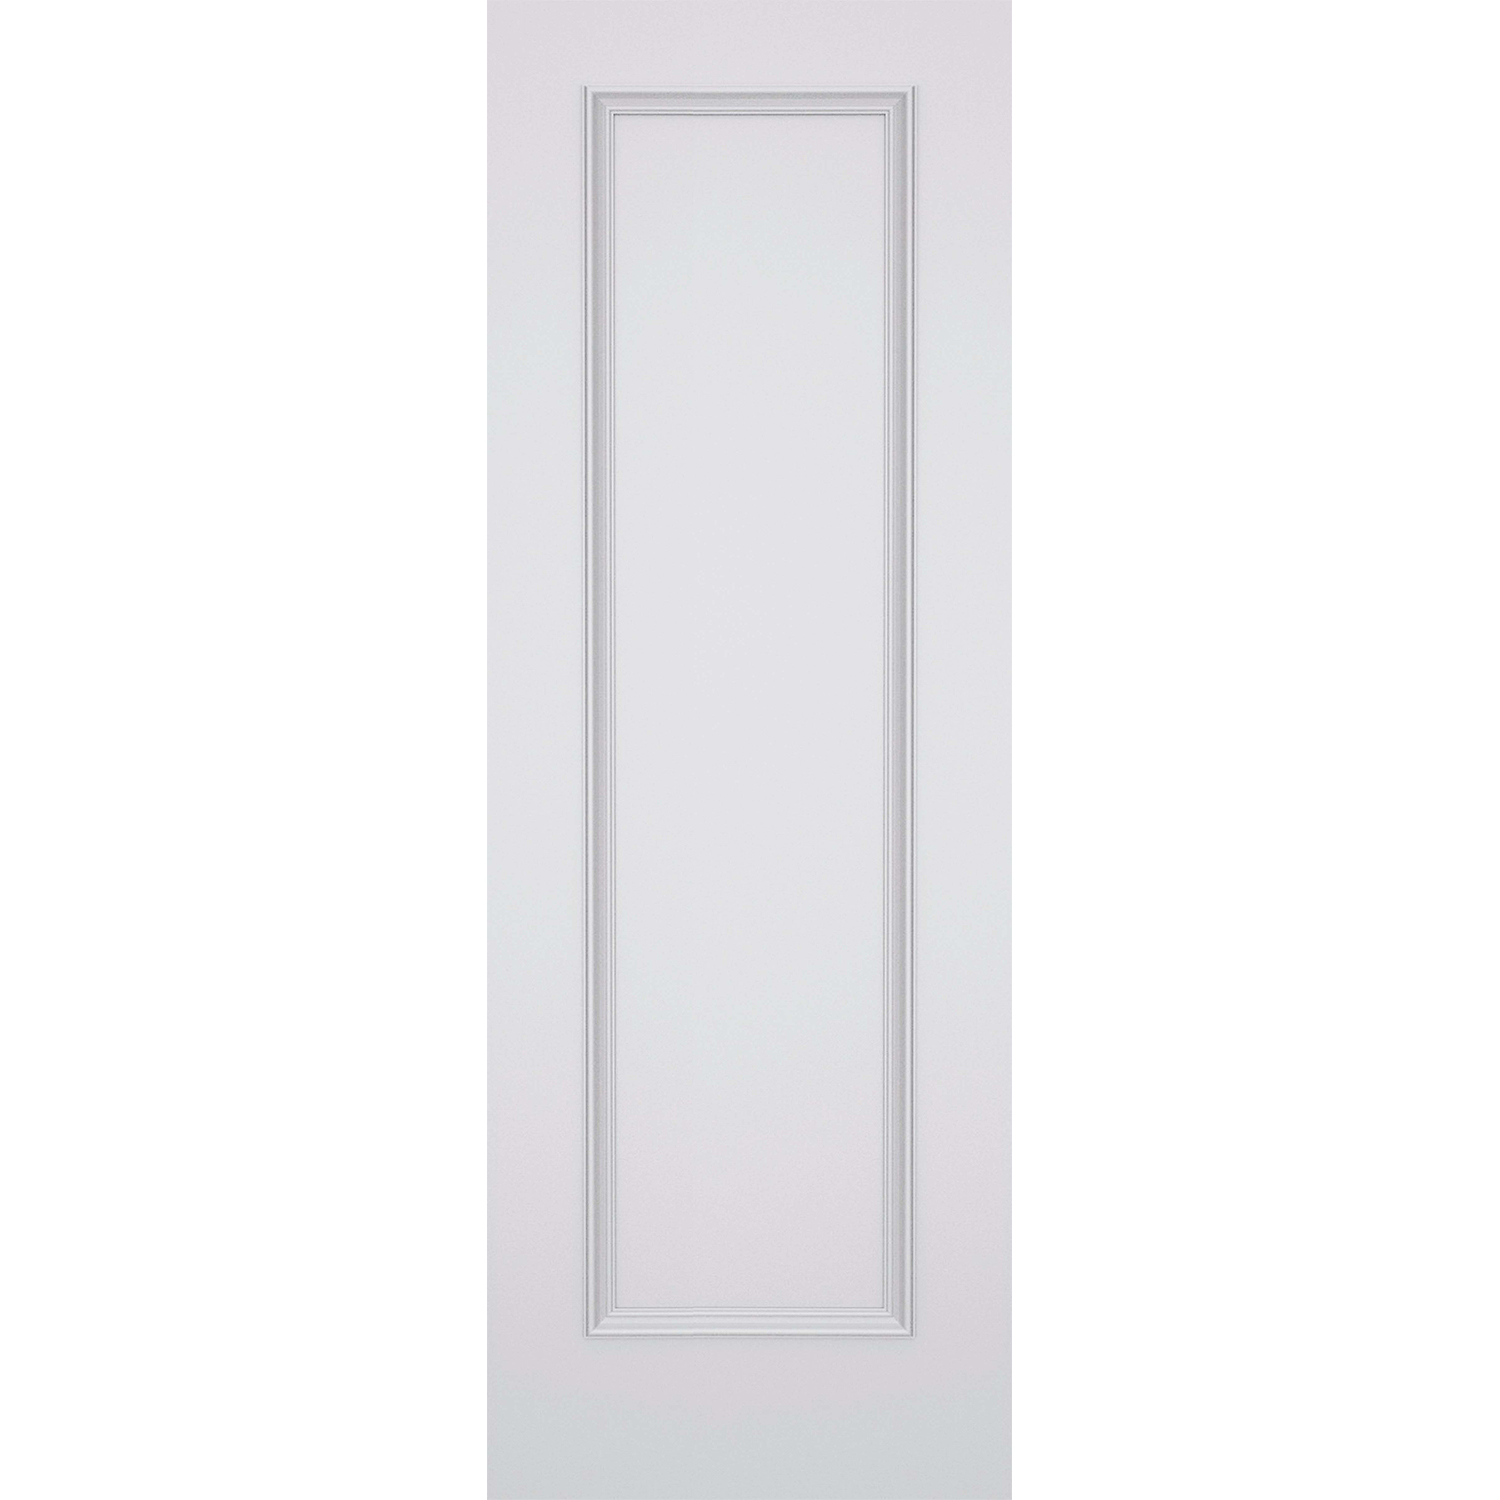 1 Panel 80 x 28 x 1-3/8 Smooth Hollow Door Raised